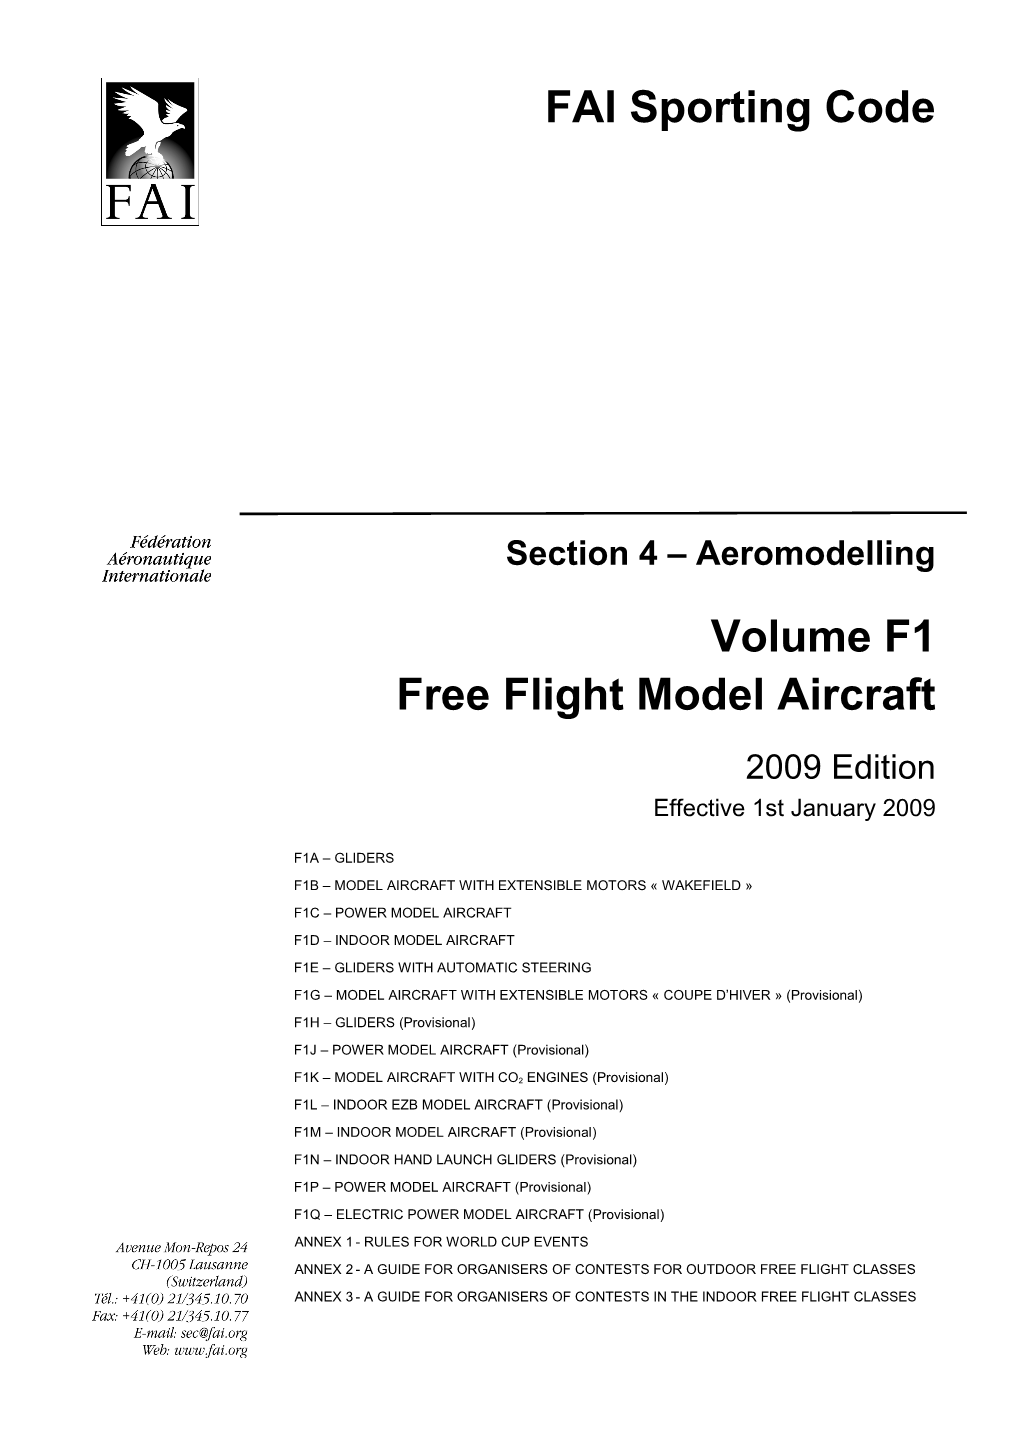 Free Flight Model Aircraft